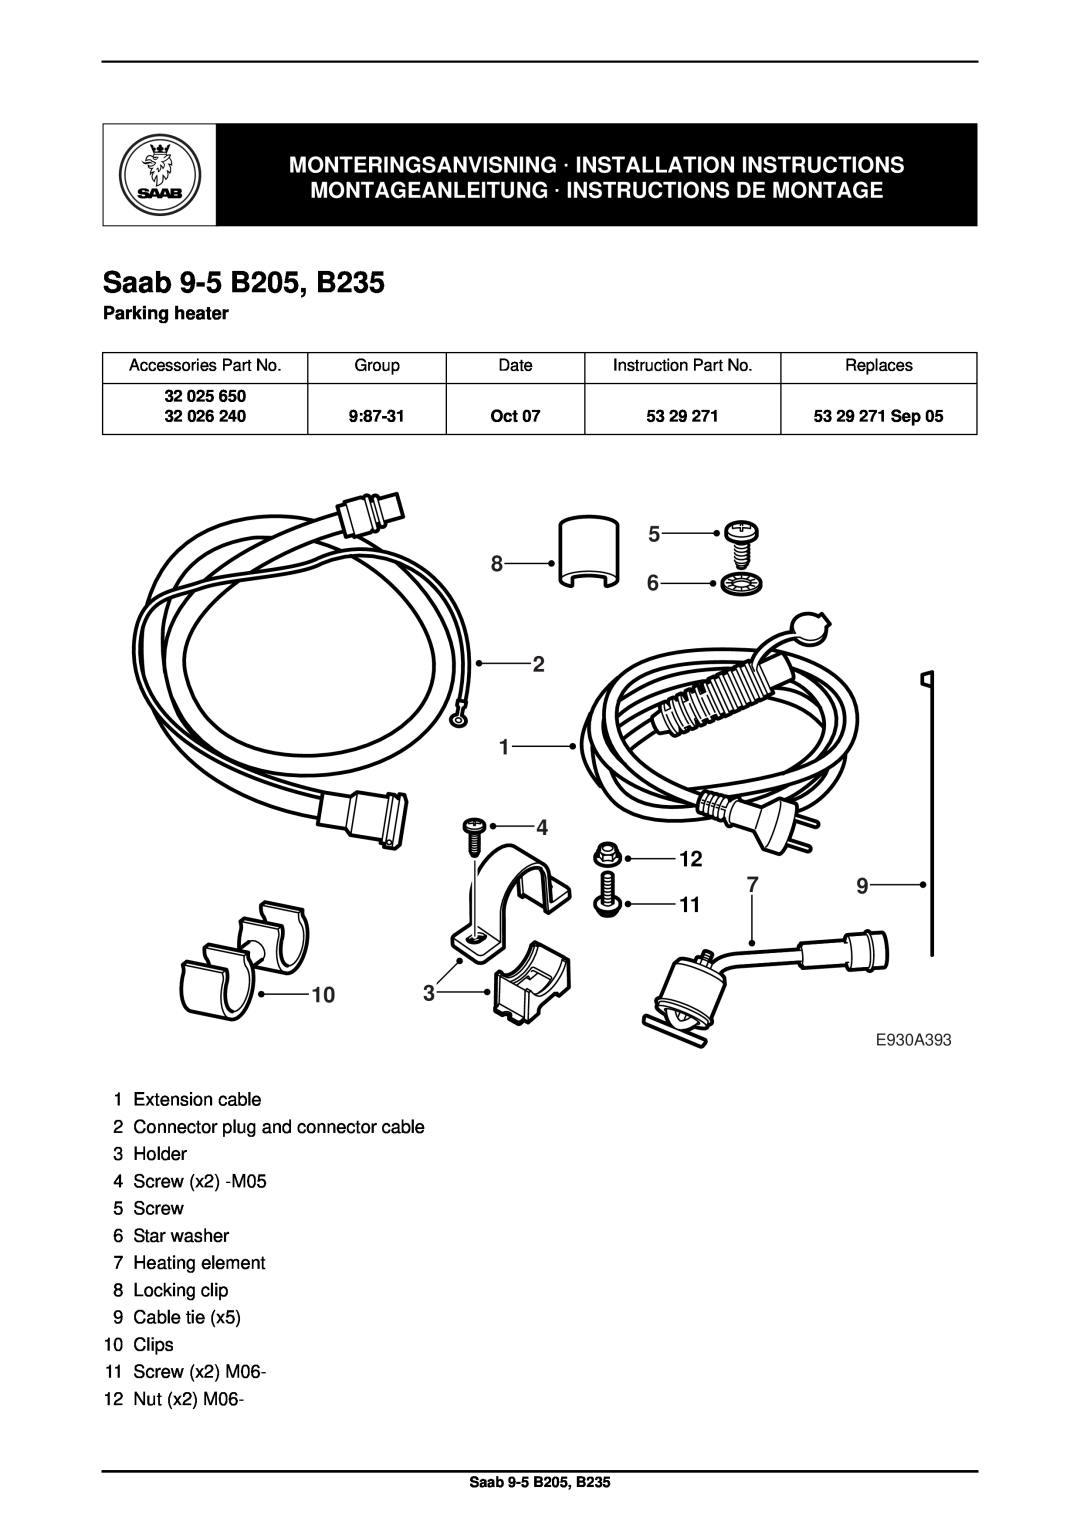 Saab installation instructions Parking heater, Saab 9-5 B205, B235, Monteringsanvisning · Installation Instructions 